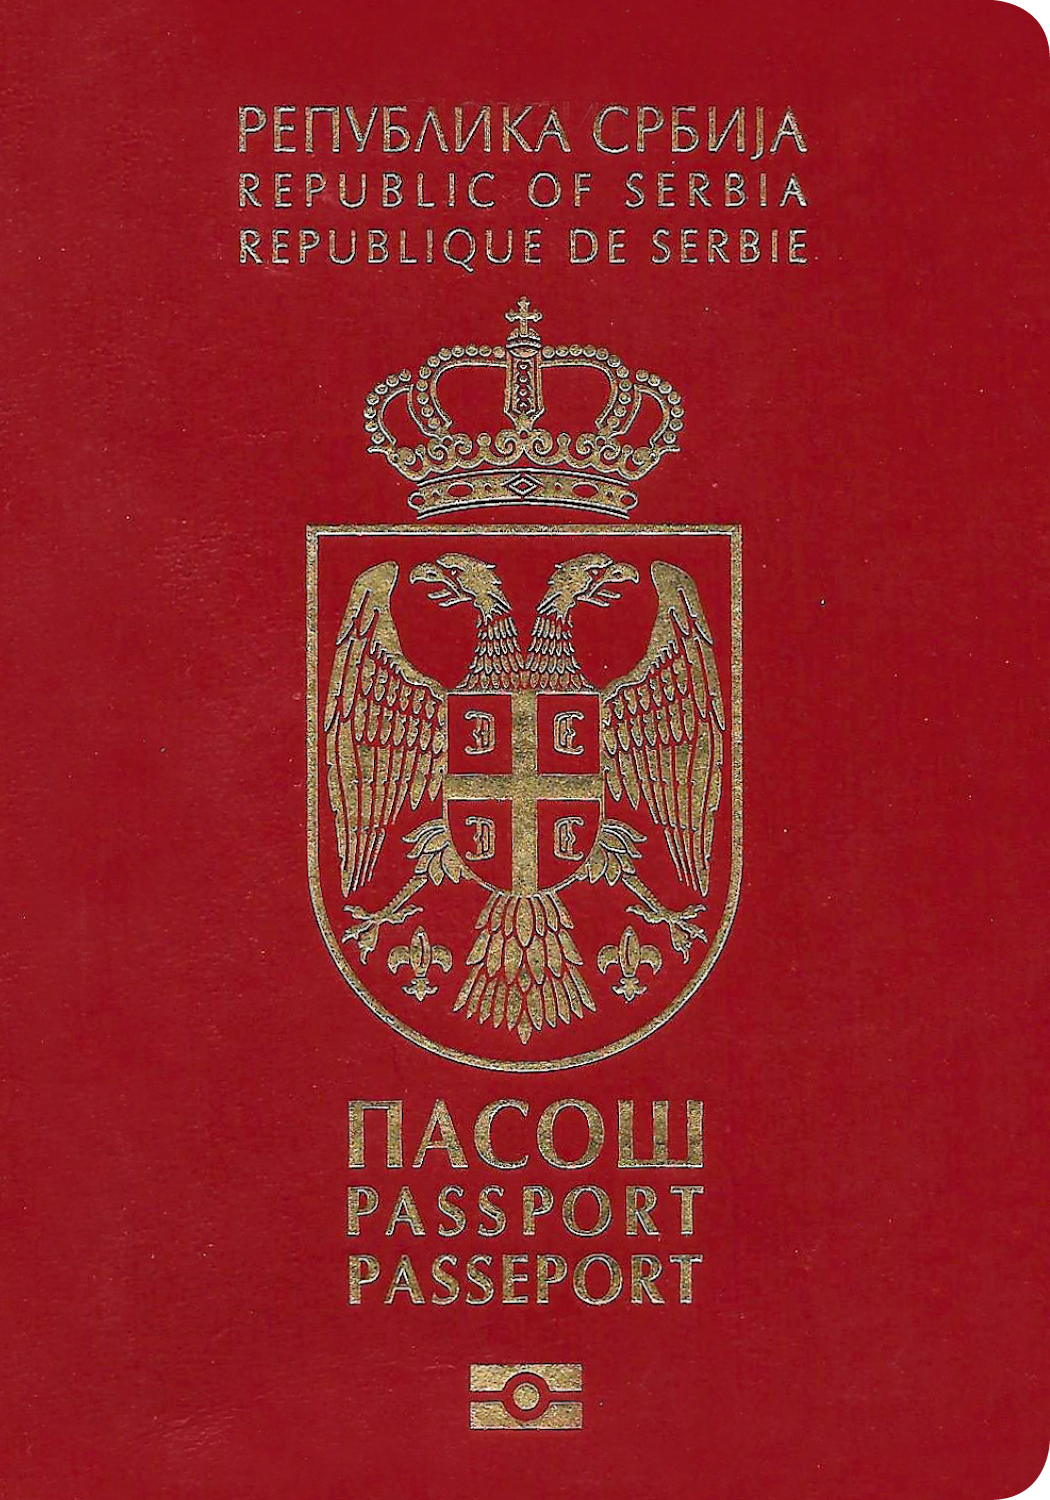 A regular or ordinary Serbian passport - Front side